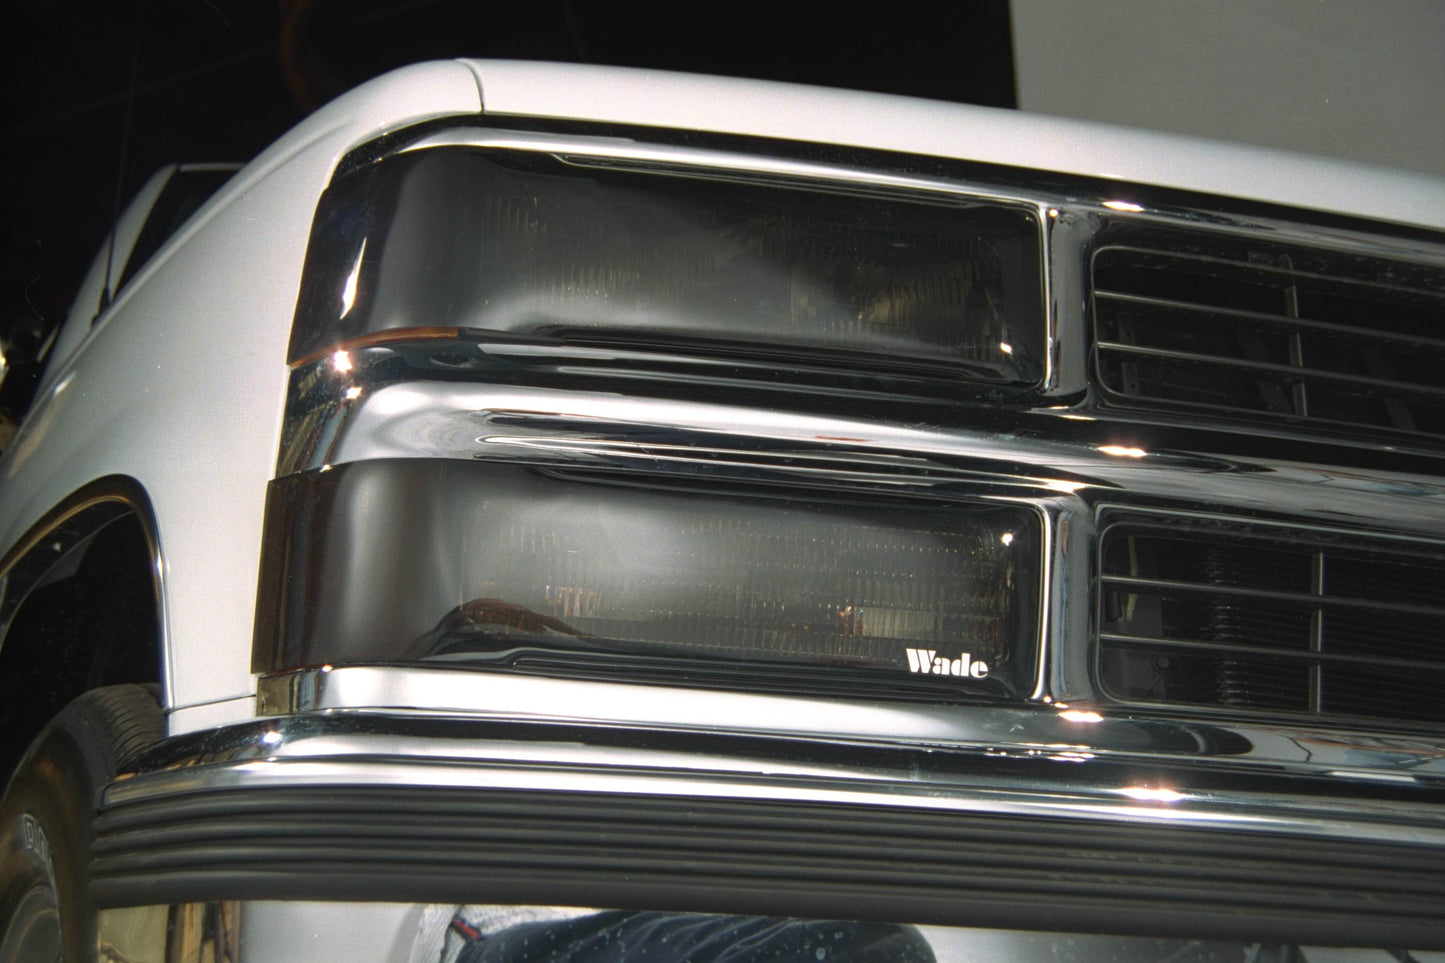 1986 GMC Safari Van Head Light Covers